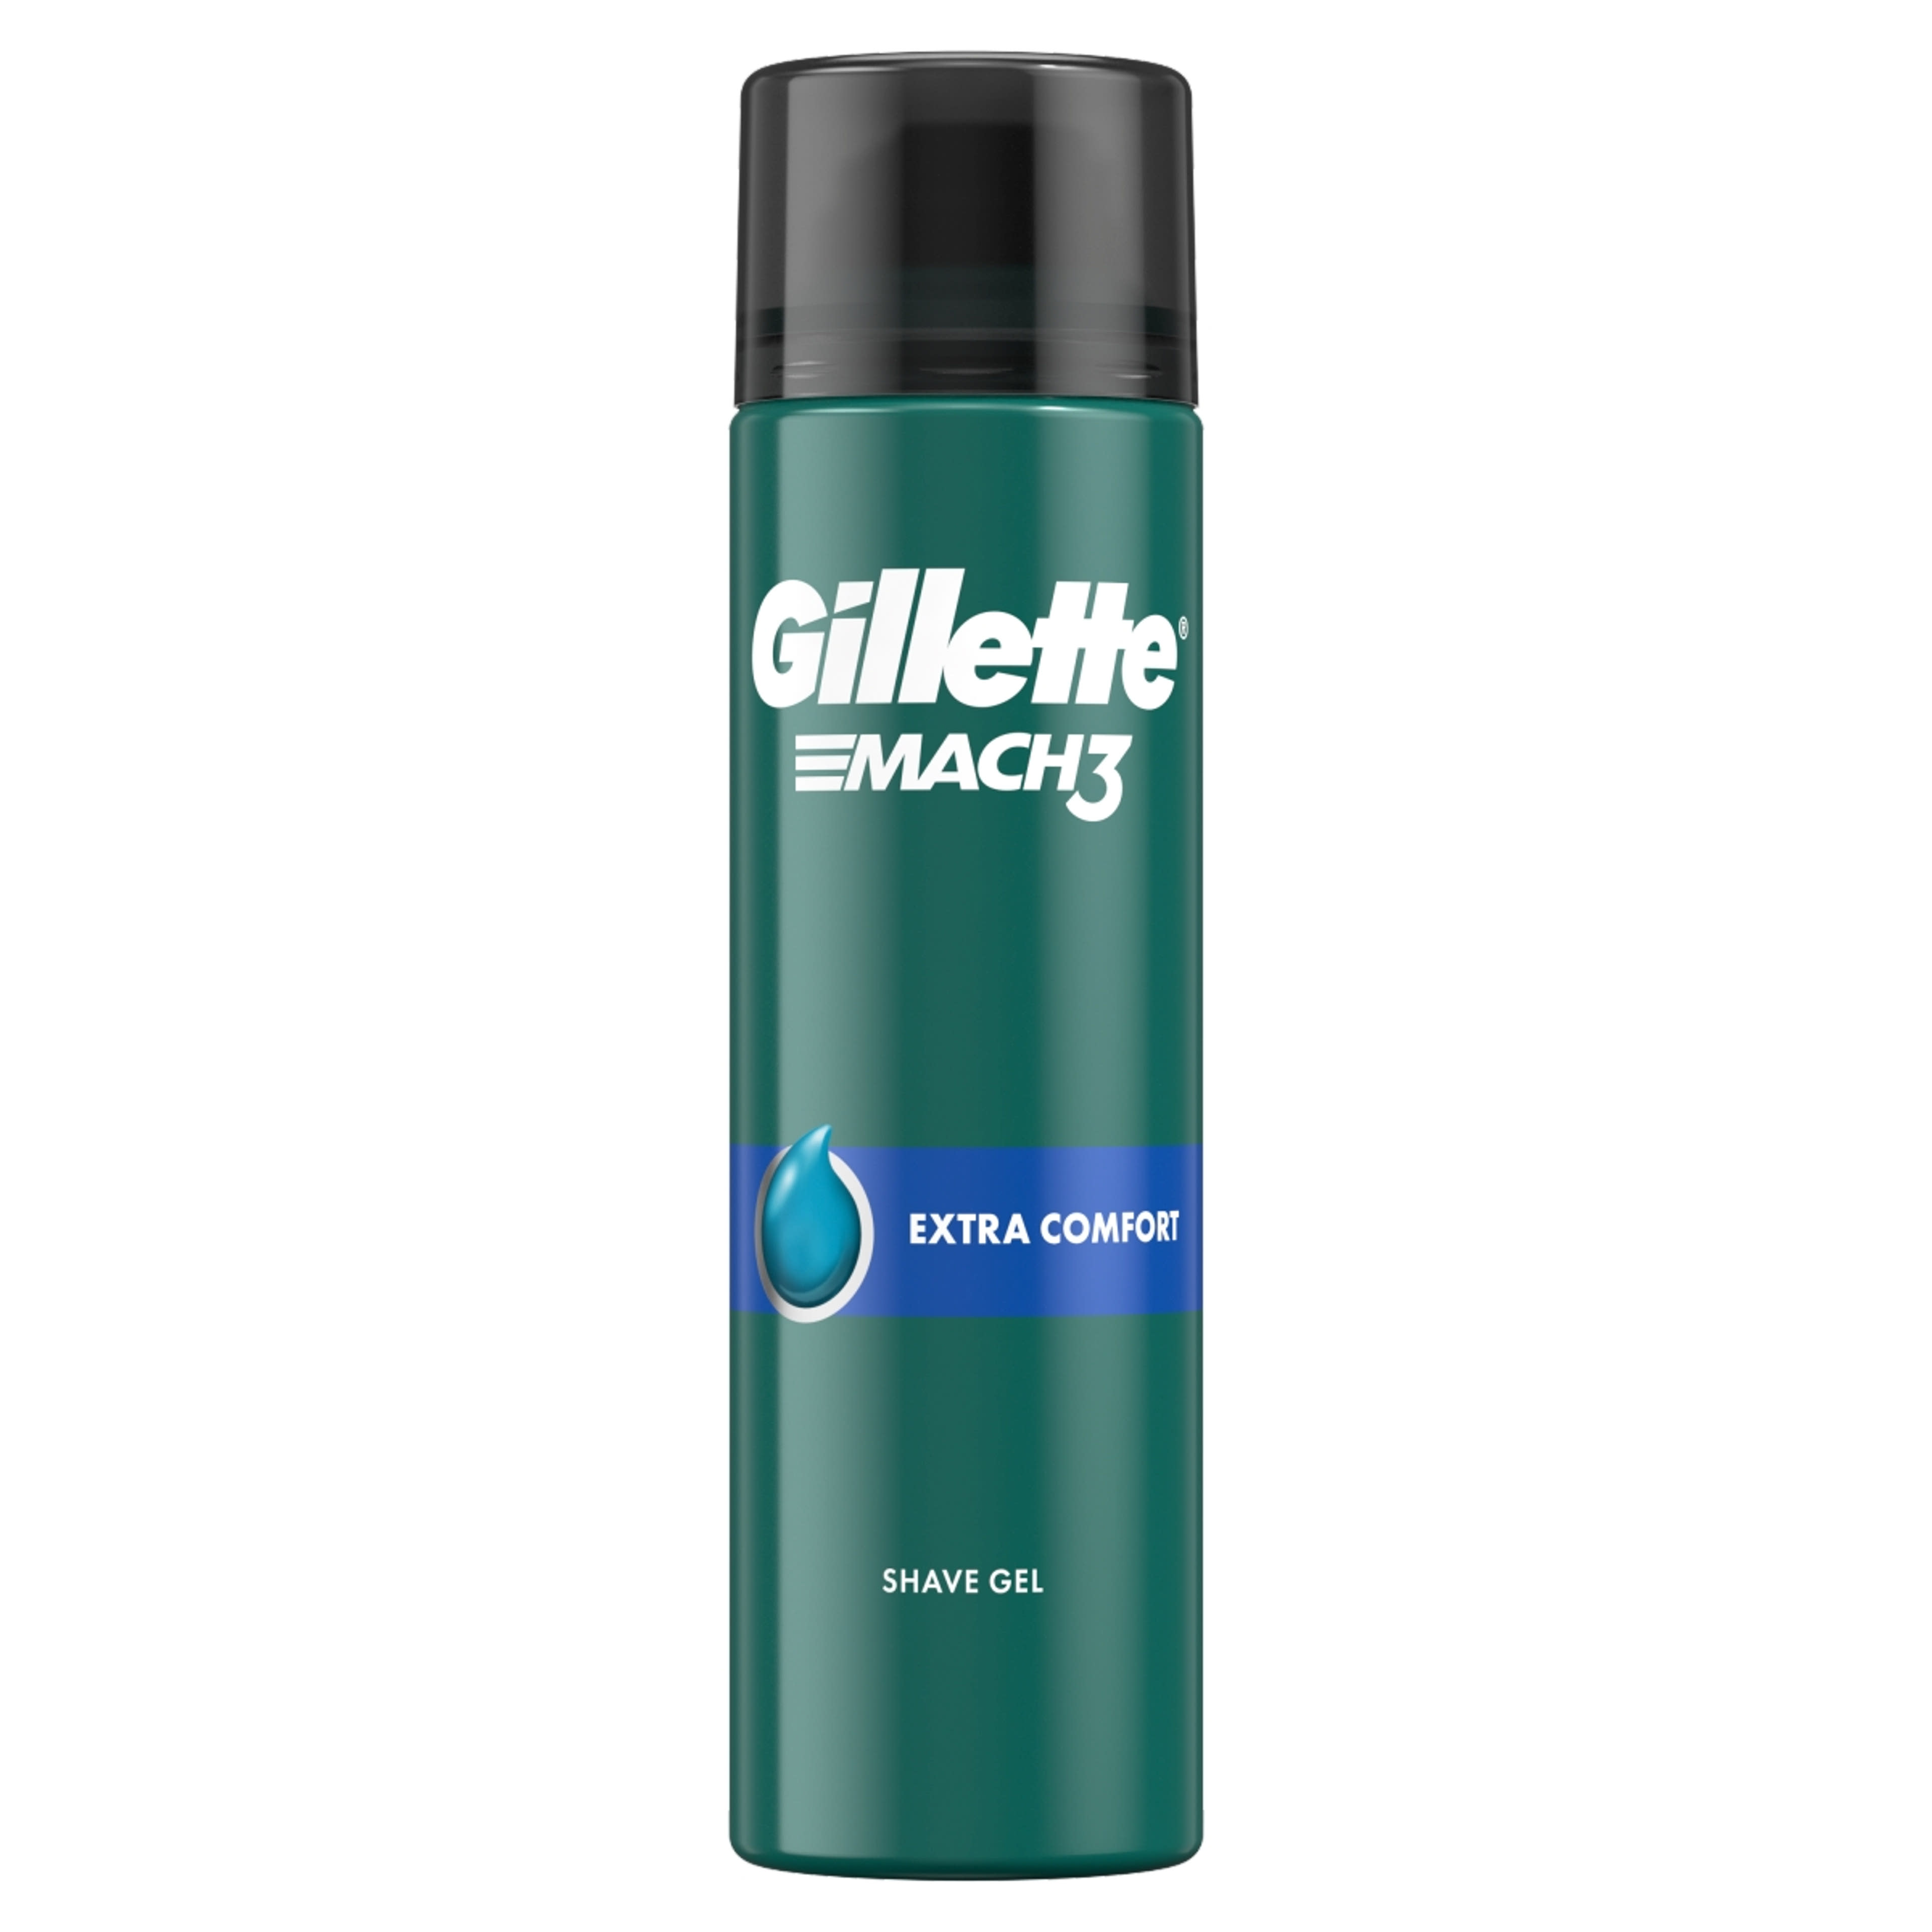 Gillette Mach3 bornyugtató borotvazselé - 200 ml